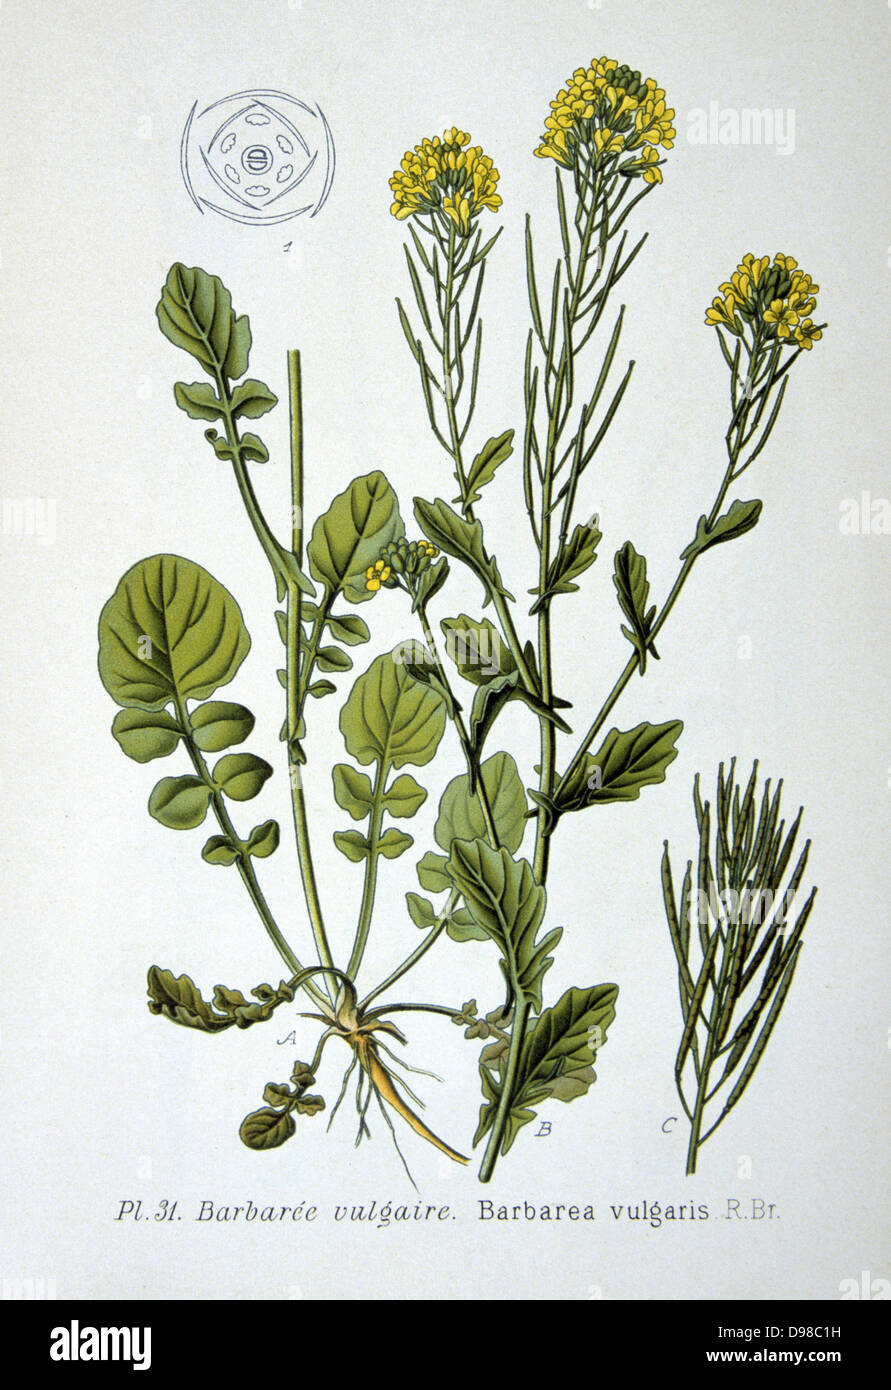 Common Bittercress or Yellow Rocket (Barbarea vulgaris), biennial wild herb of Brassica family native of Europe. From Amedee Masclef 'Atlas des Plantes de France', Paris, 1893. Stock Photo